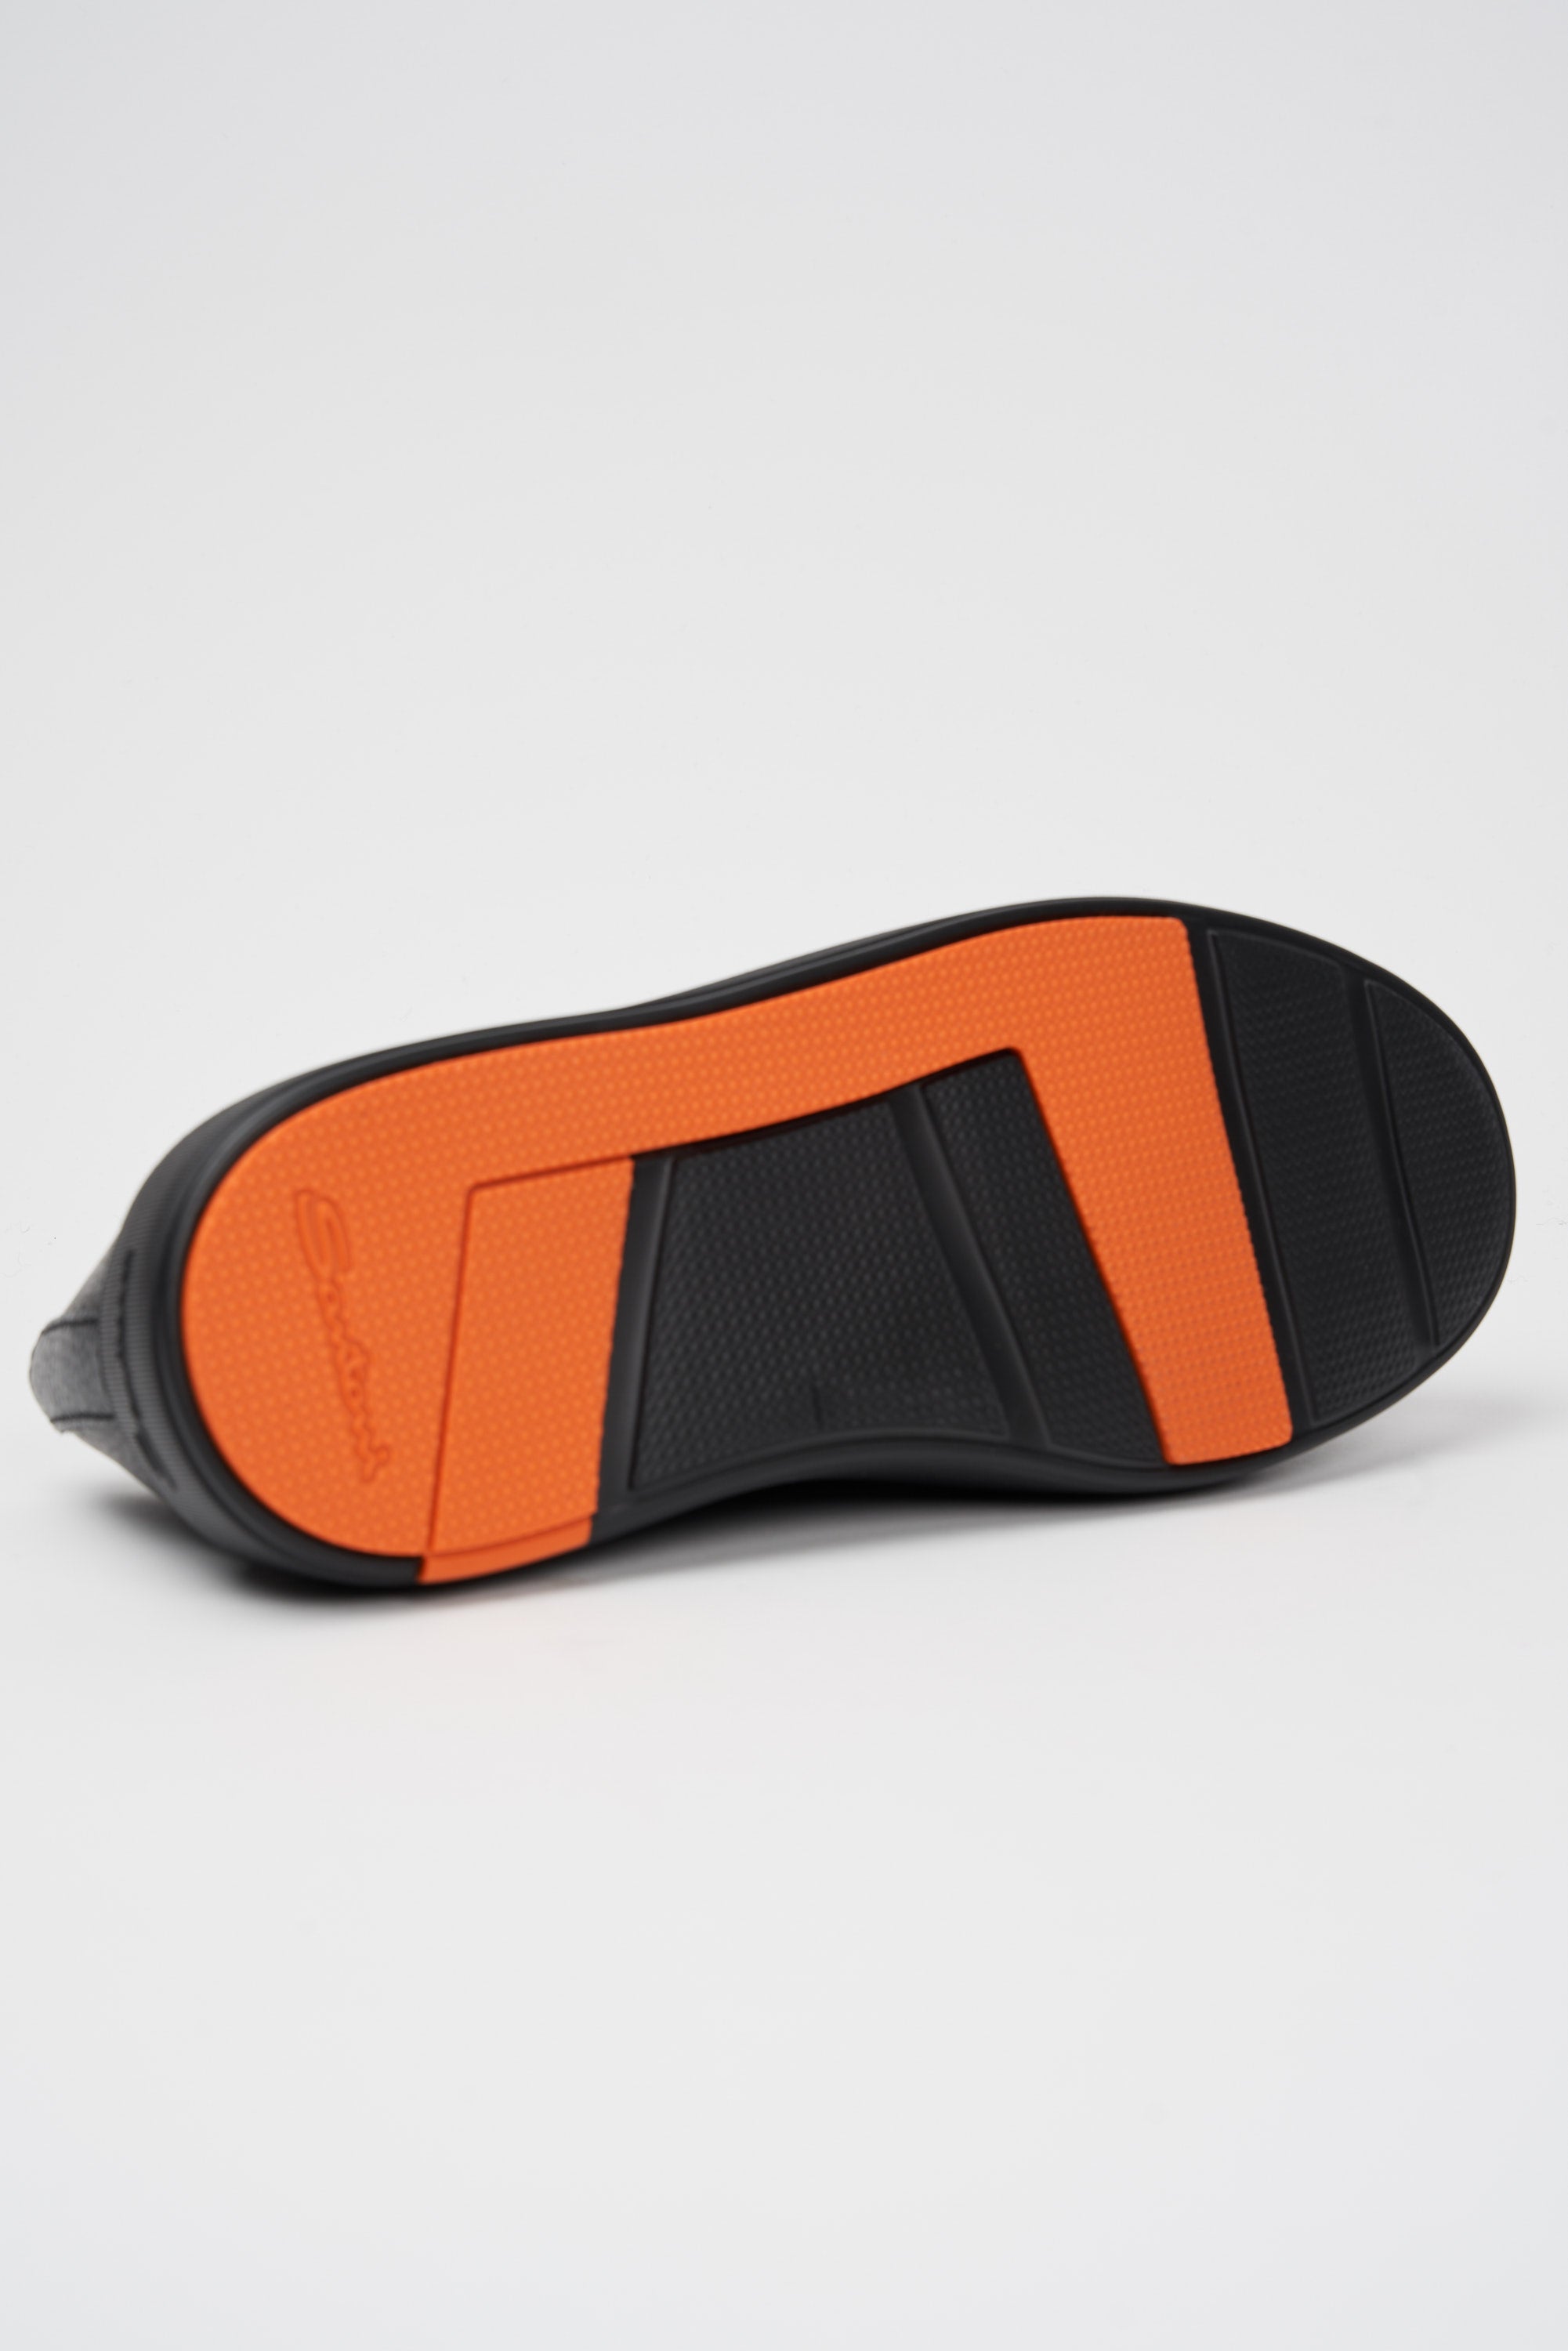 Santoni Leather Sneakers Black - 5